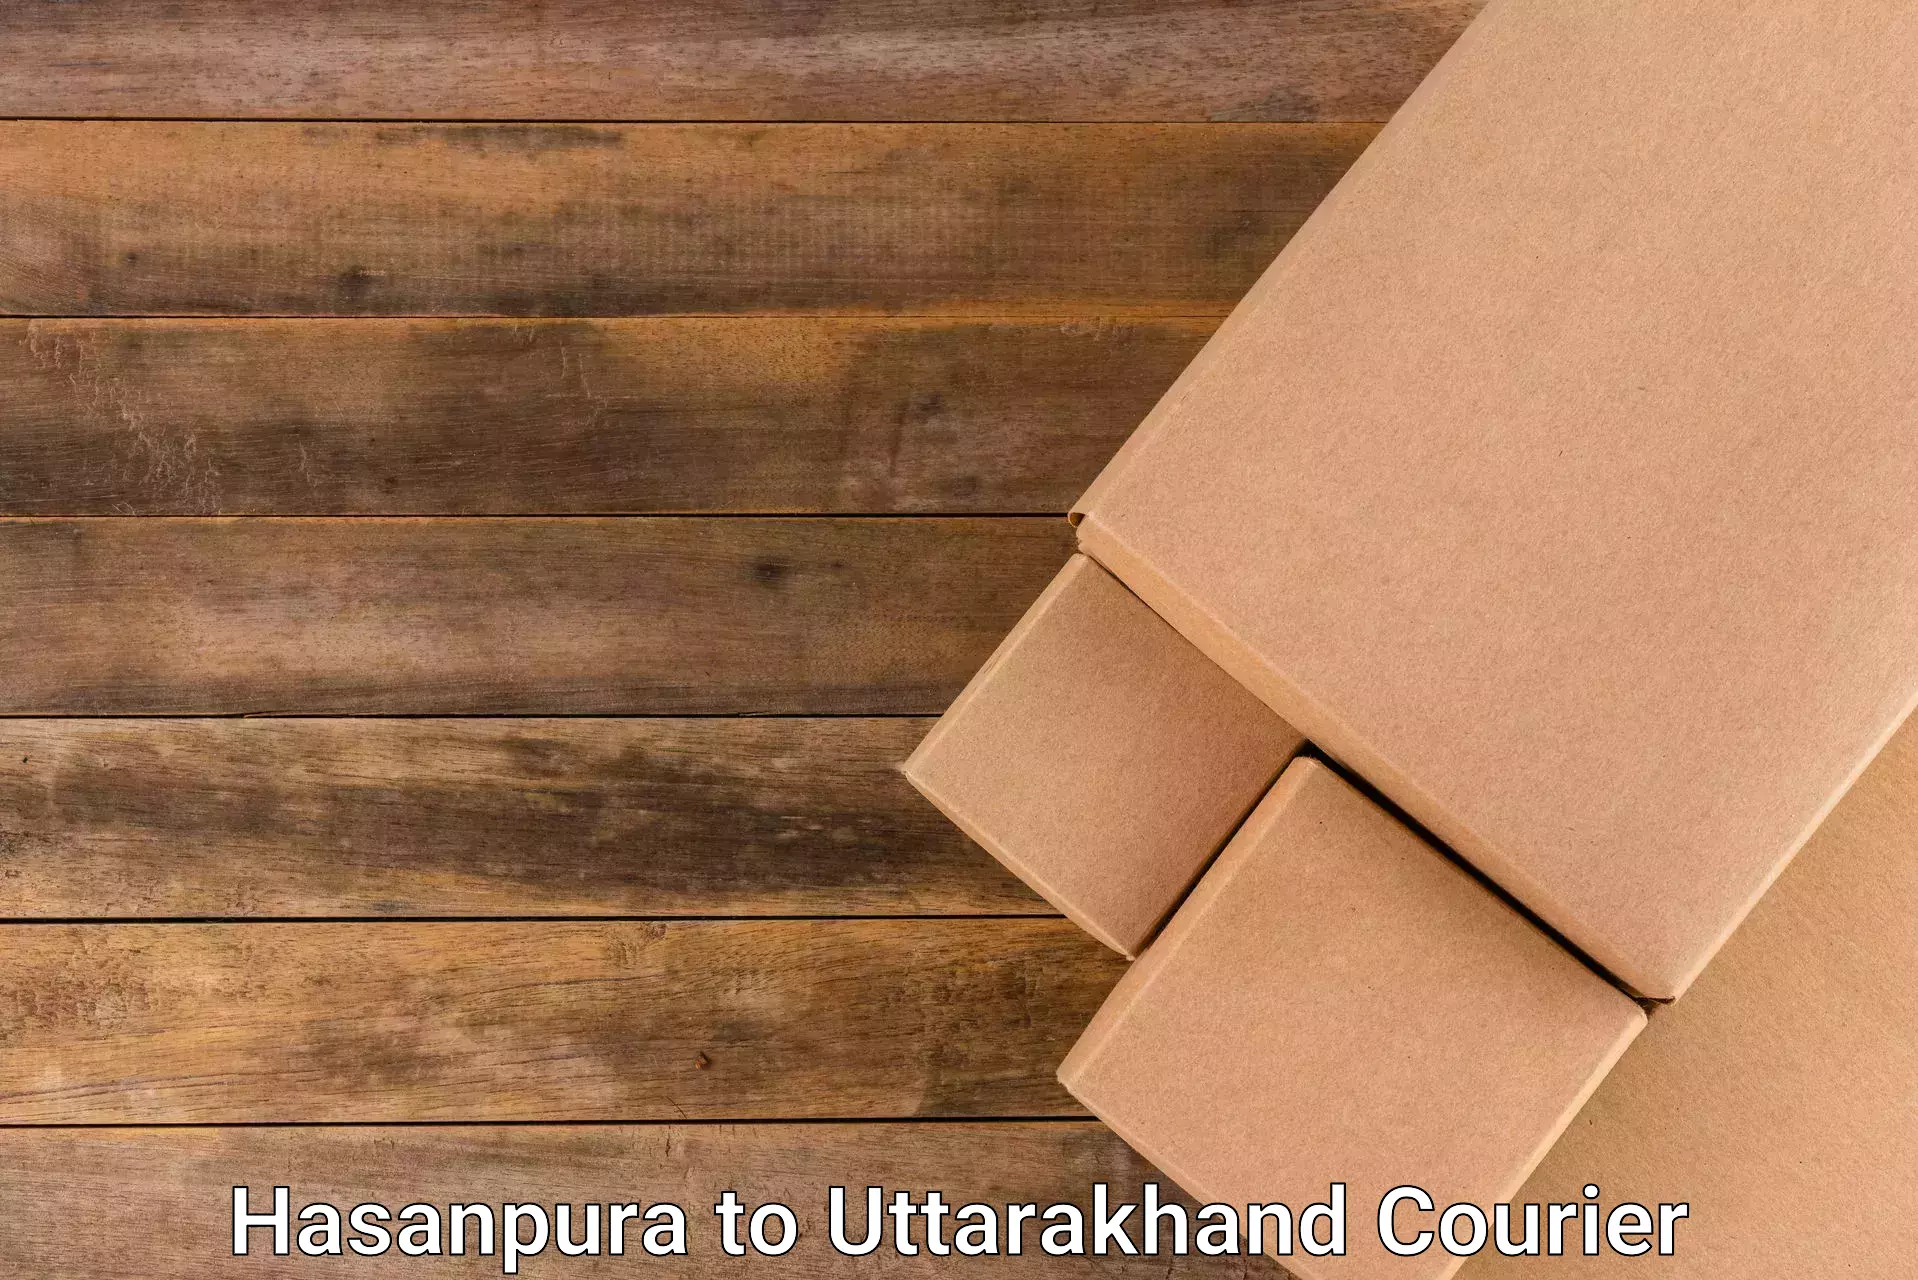 Courier service booking in Hasanpura to Dehradun